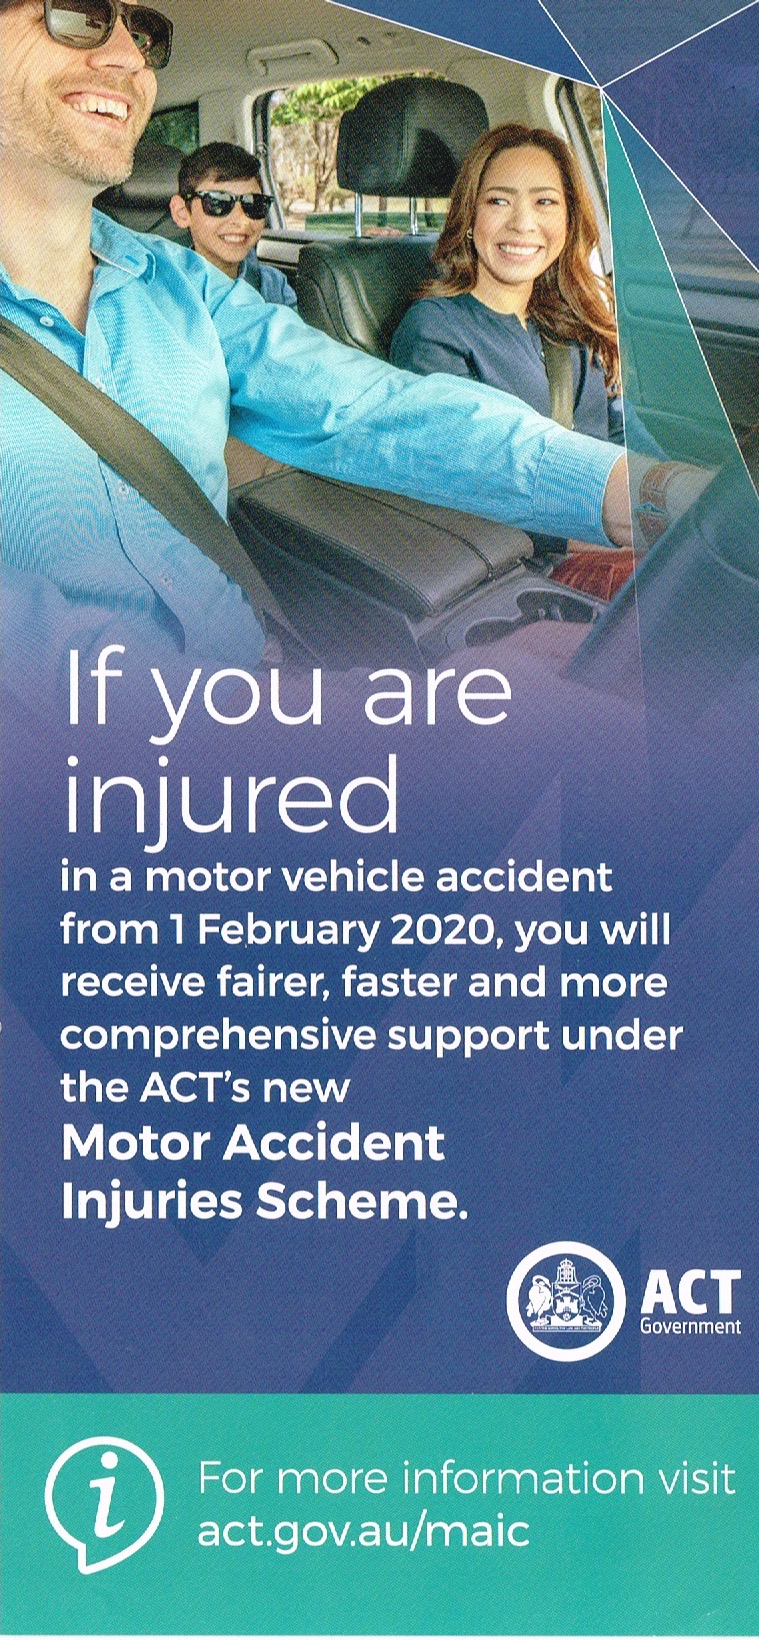 Motor Accident Injuries Scheme campaign 